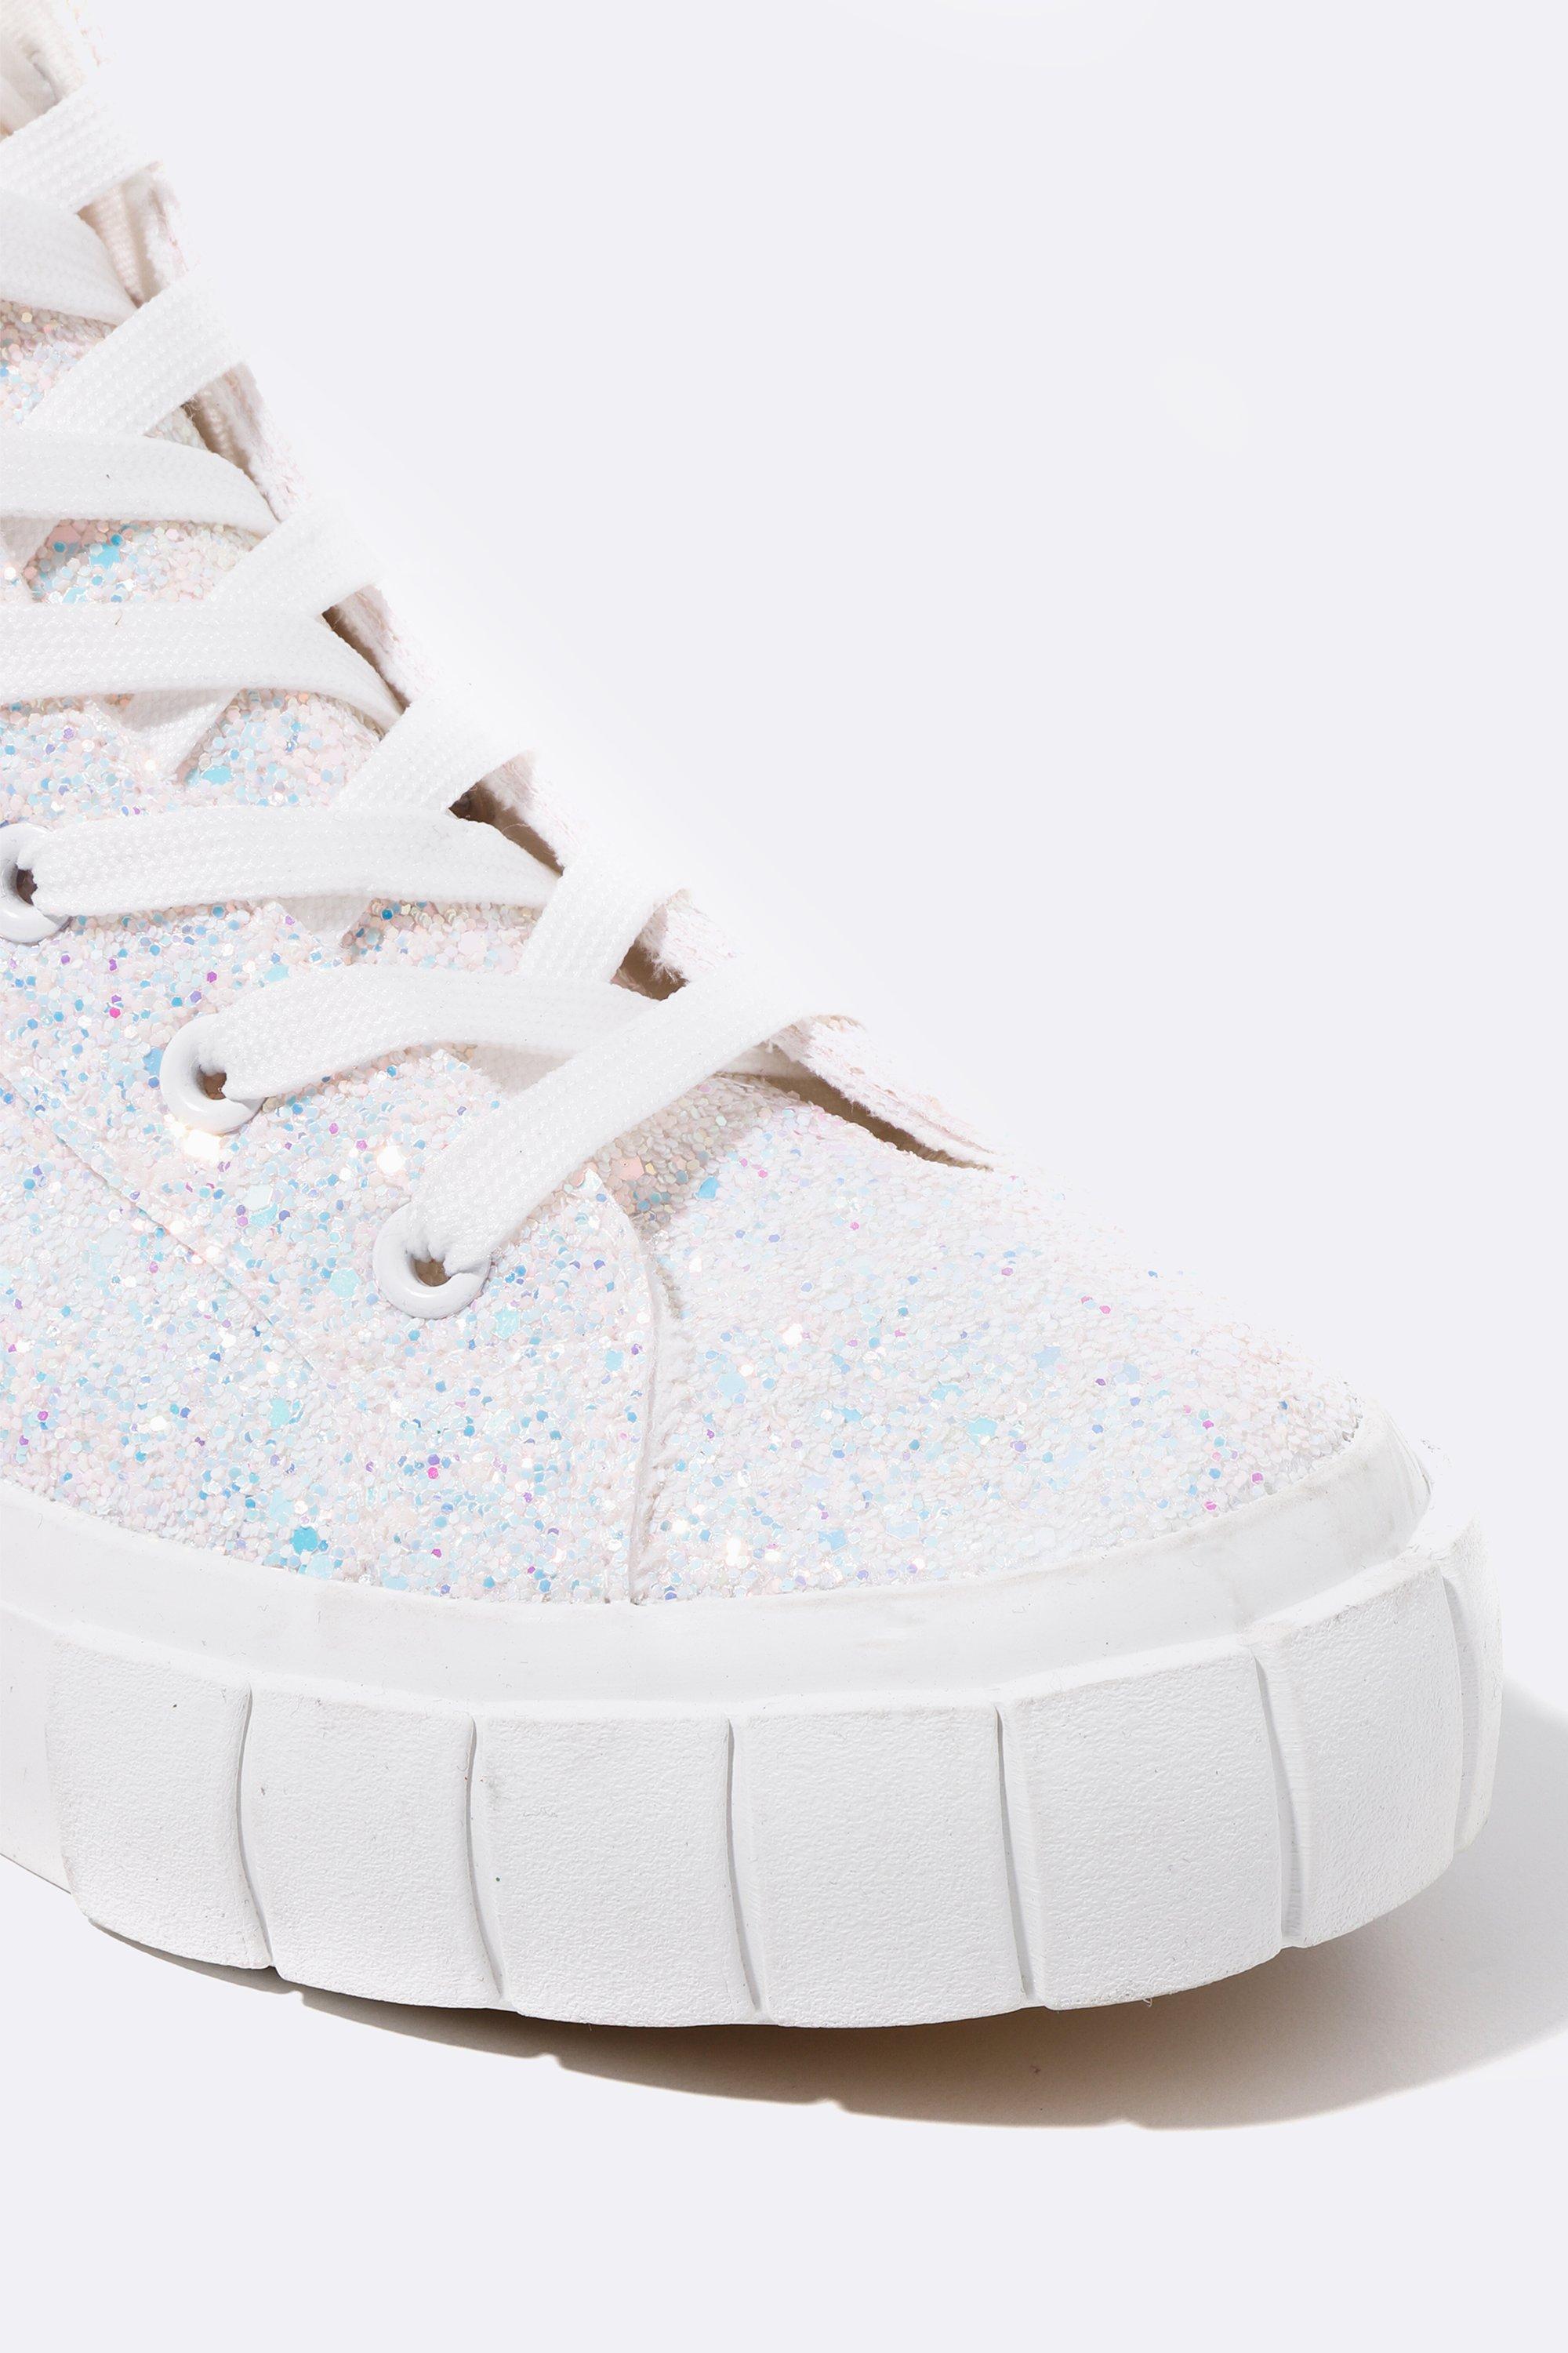 ALDO Eltivia Glitter Sneakers in White